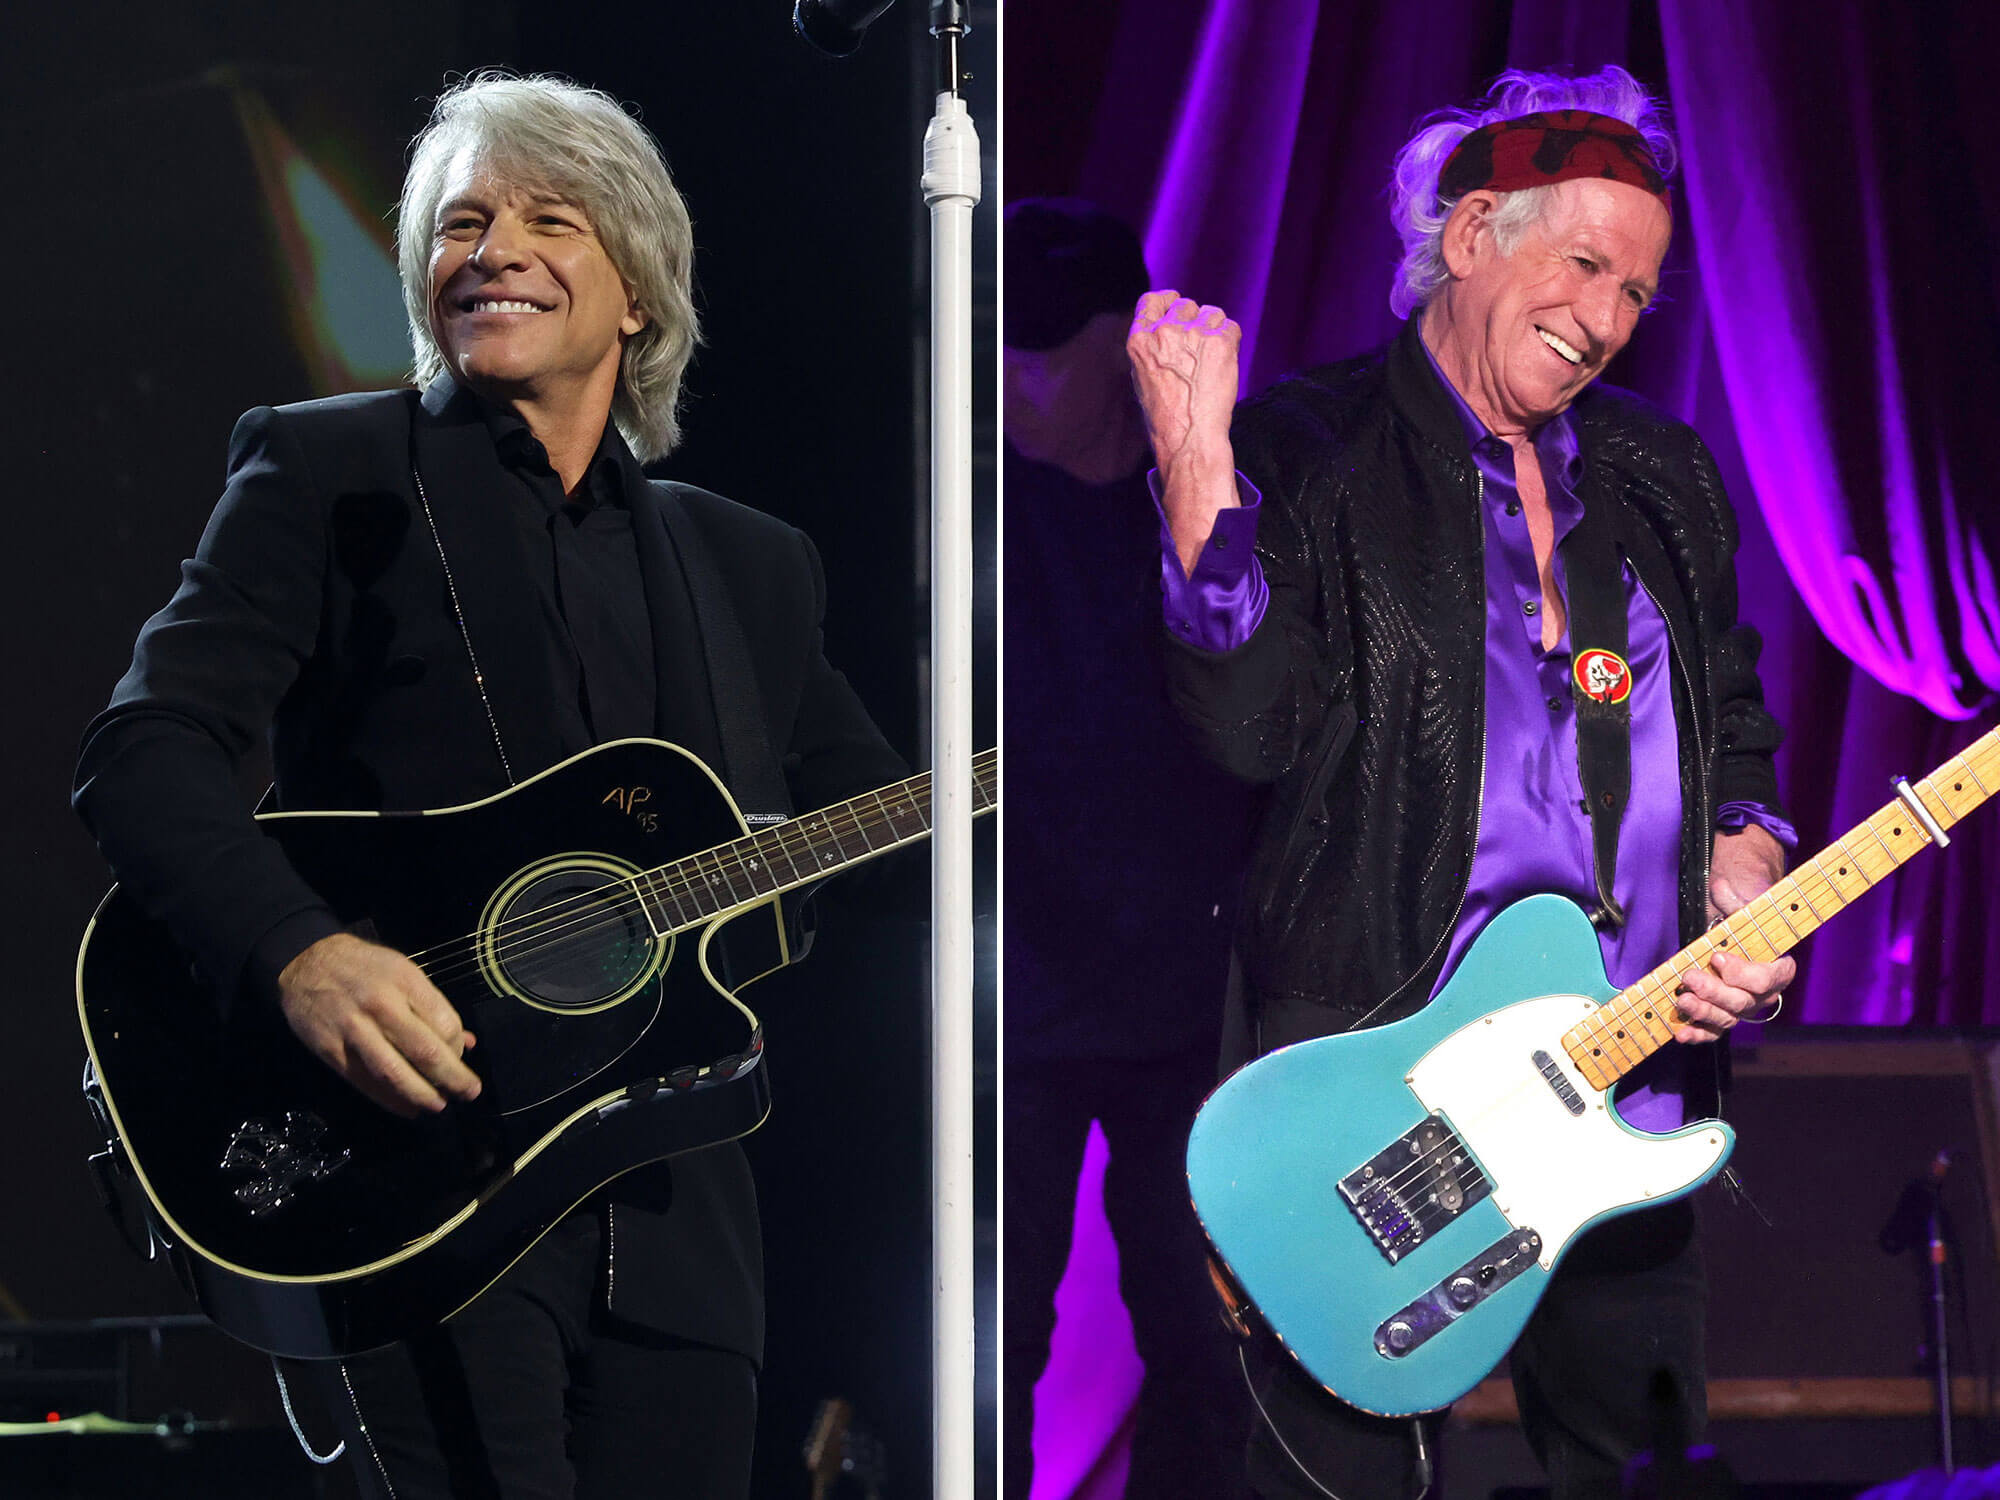 [L-R] Jon Bon Jovi and Keith Richards